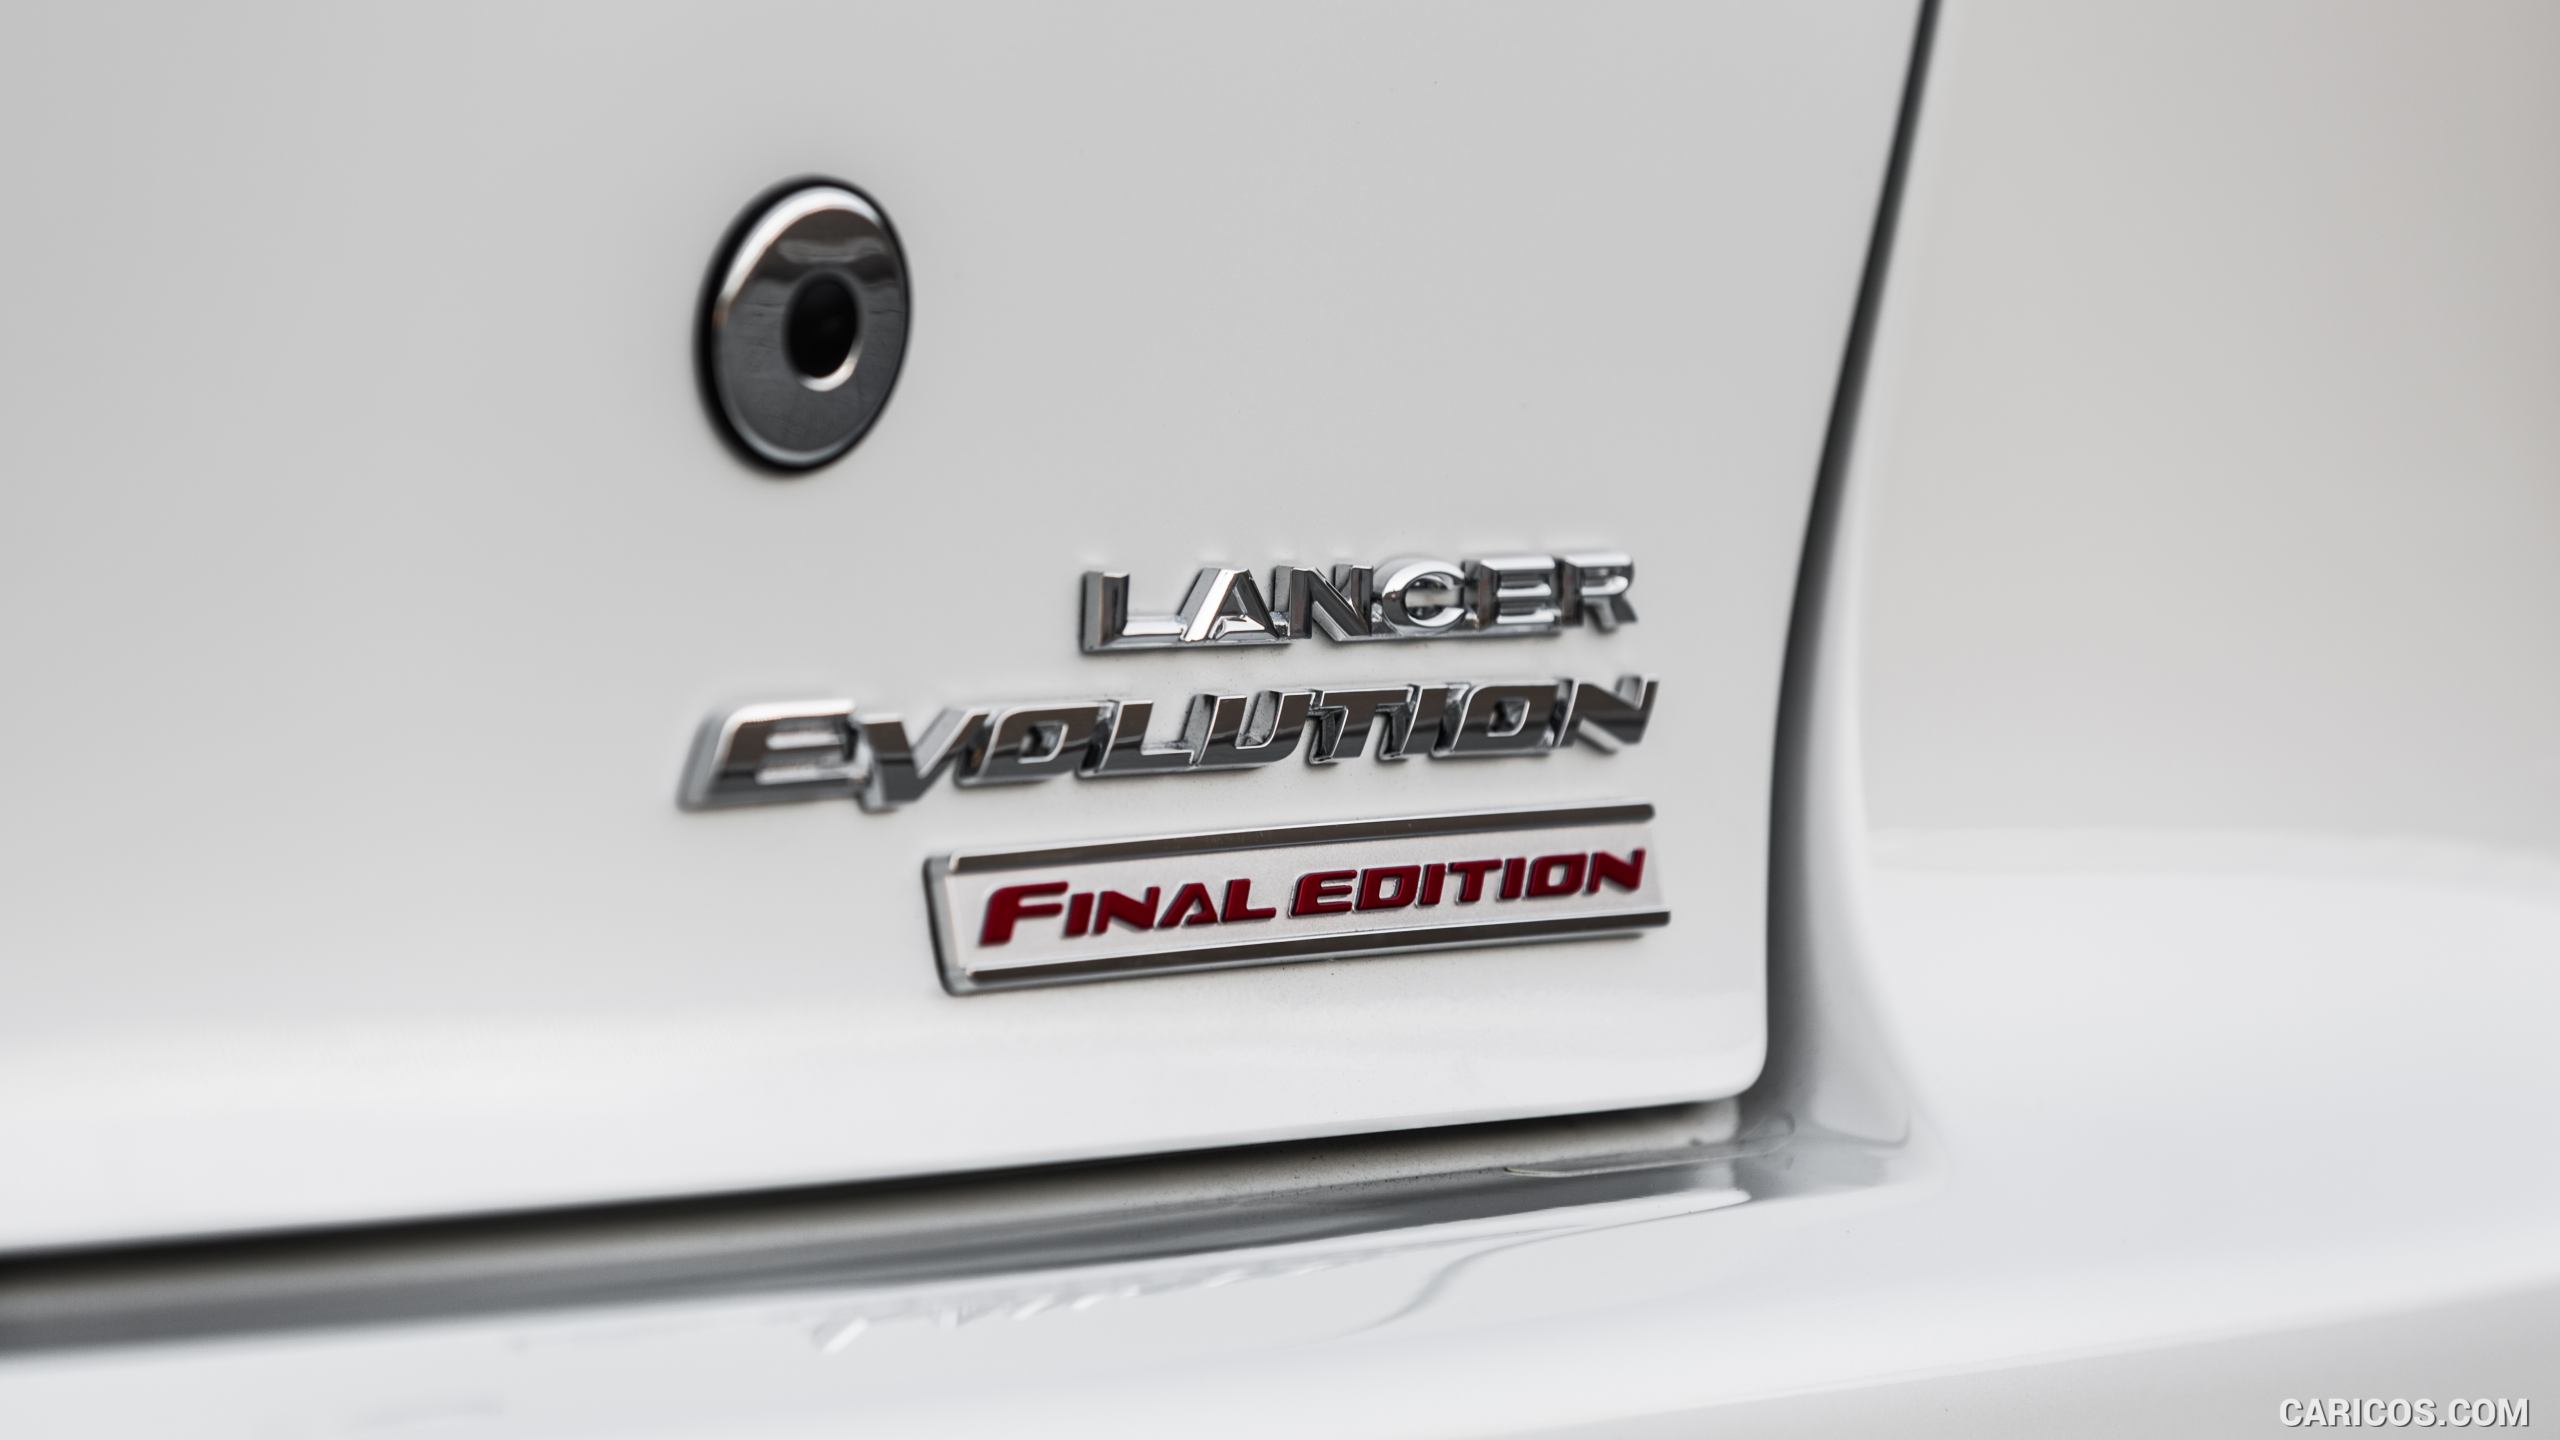 2015 Mitsubishi Lancer Evolution Final Edition - Badge, #16 of 30